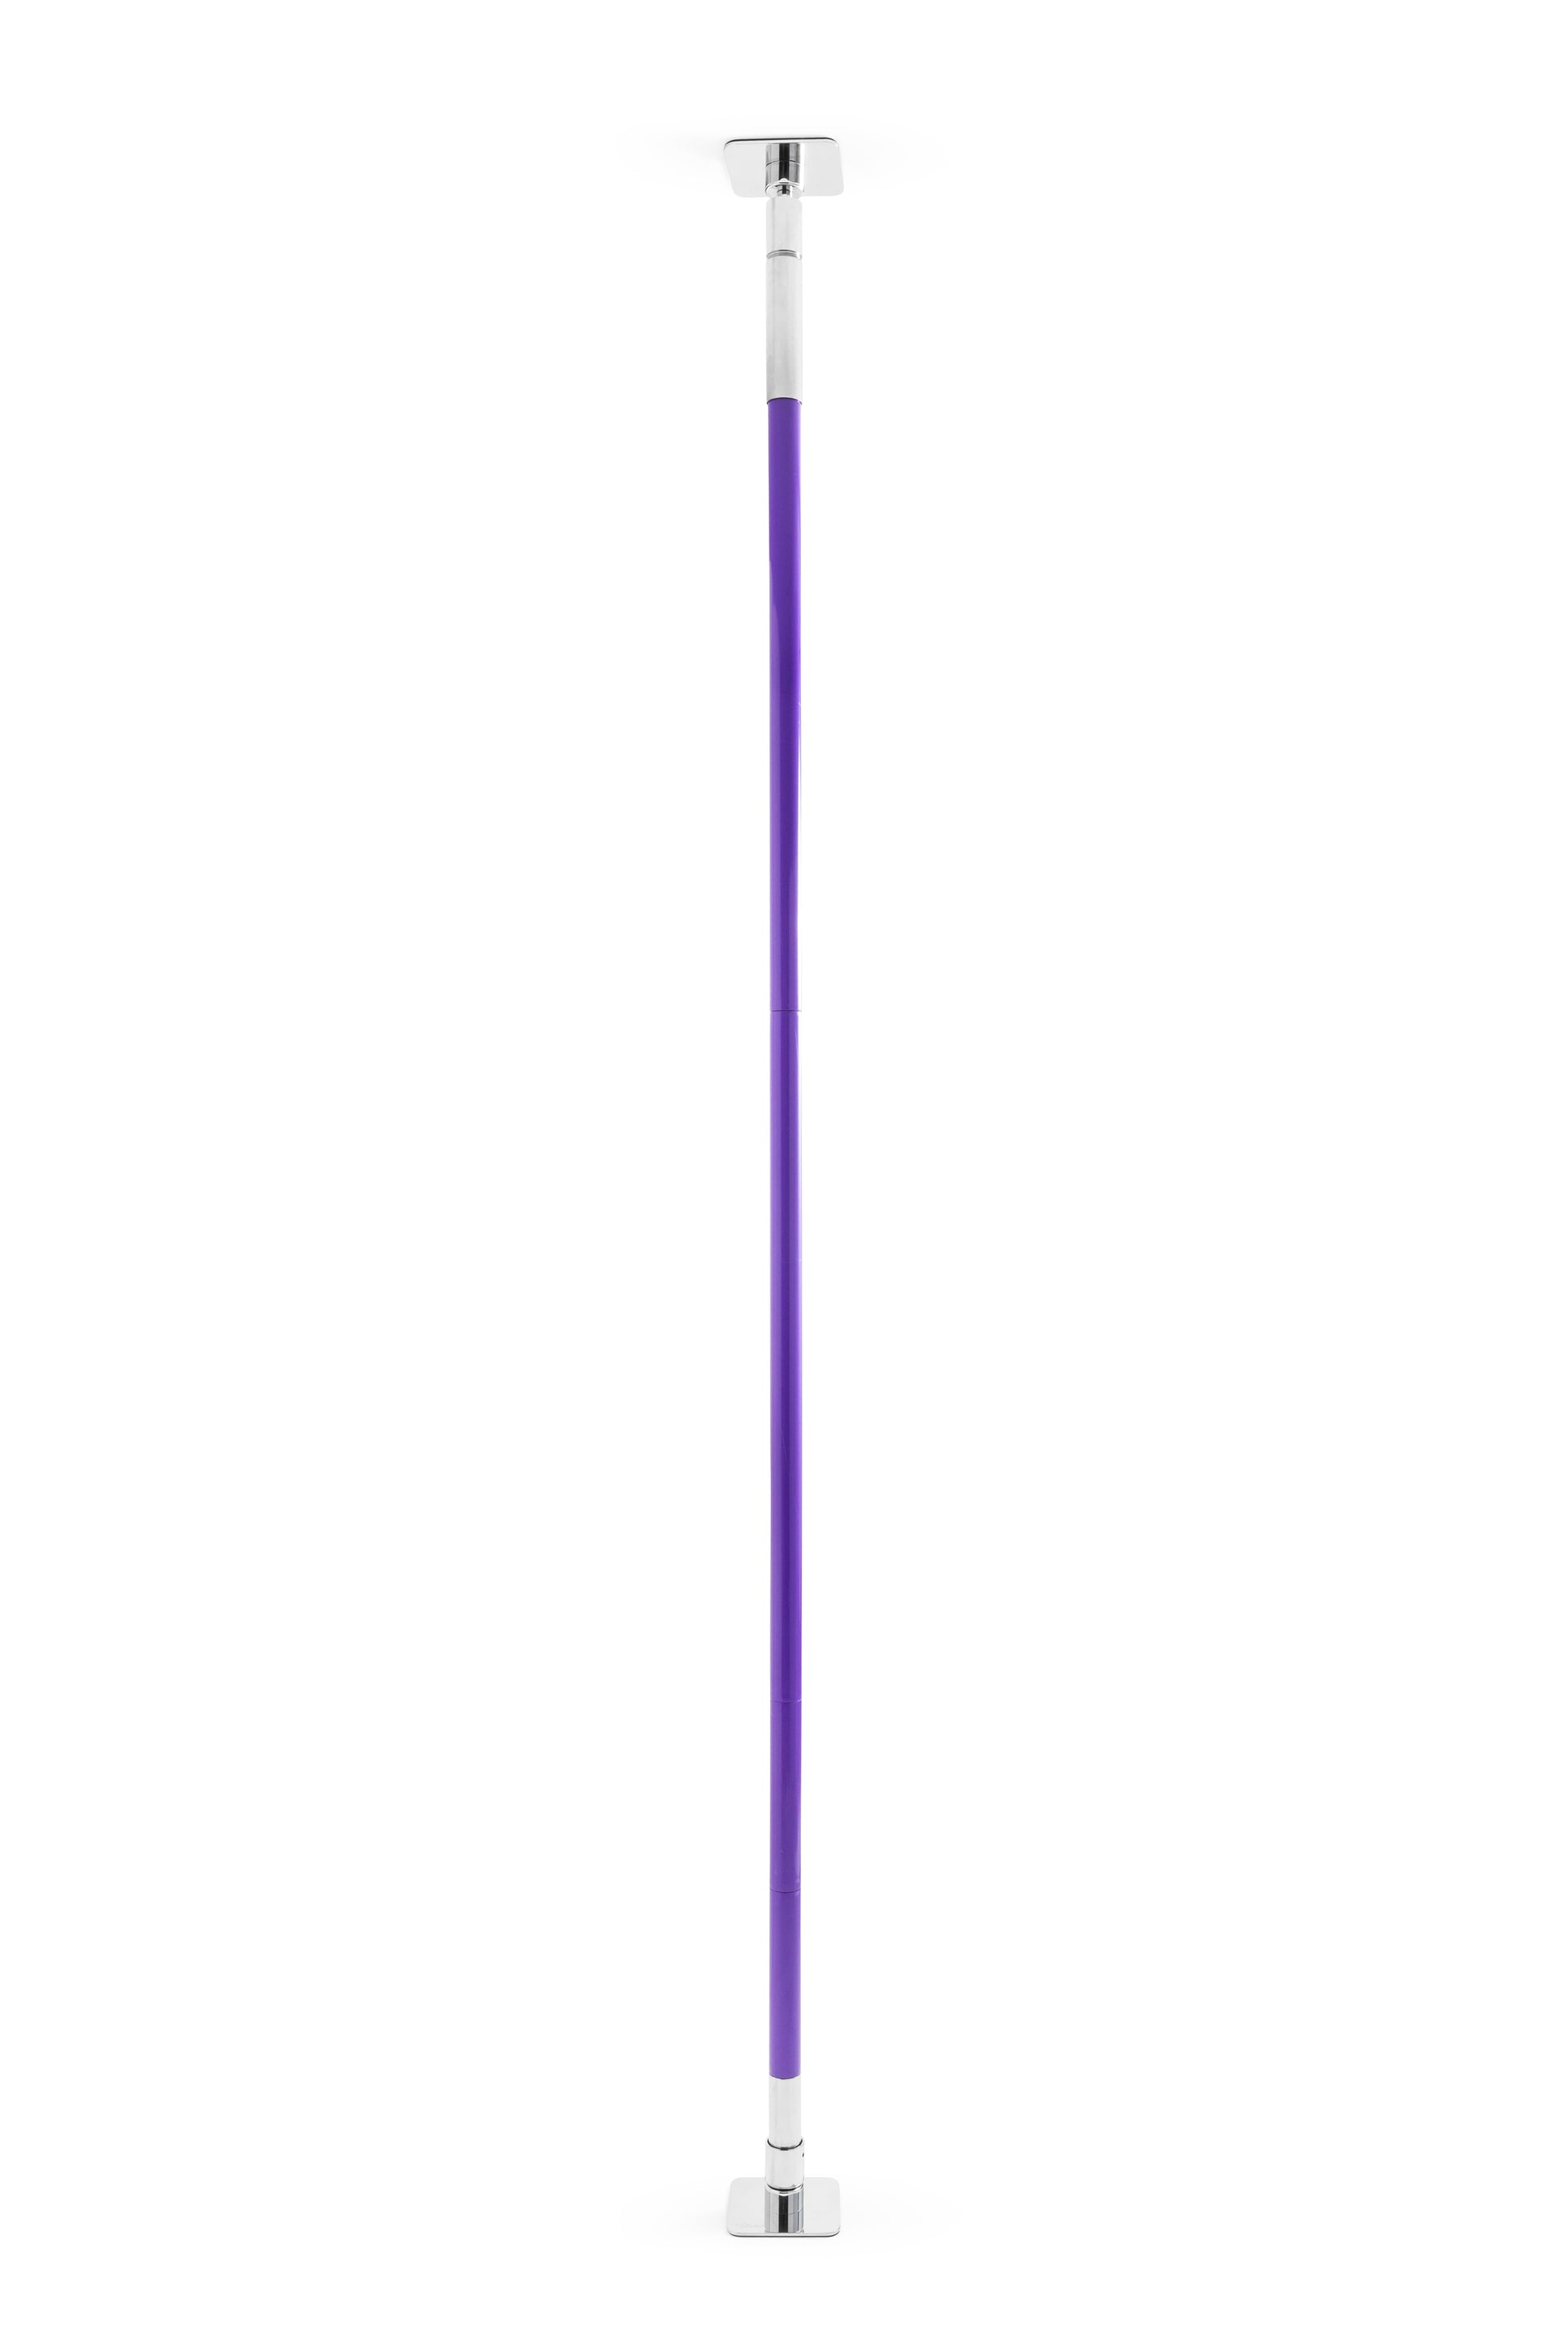 Gymax Purple Dance Pole Full Kit Portable Stripper Exercise